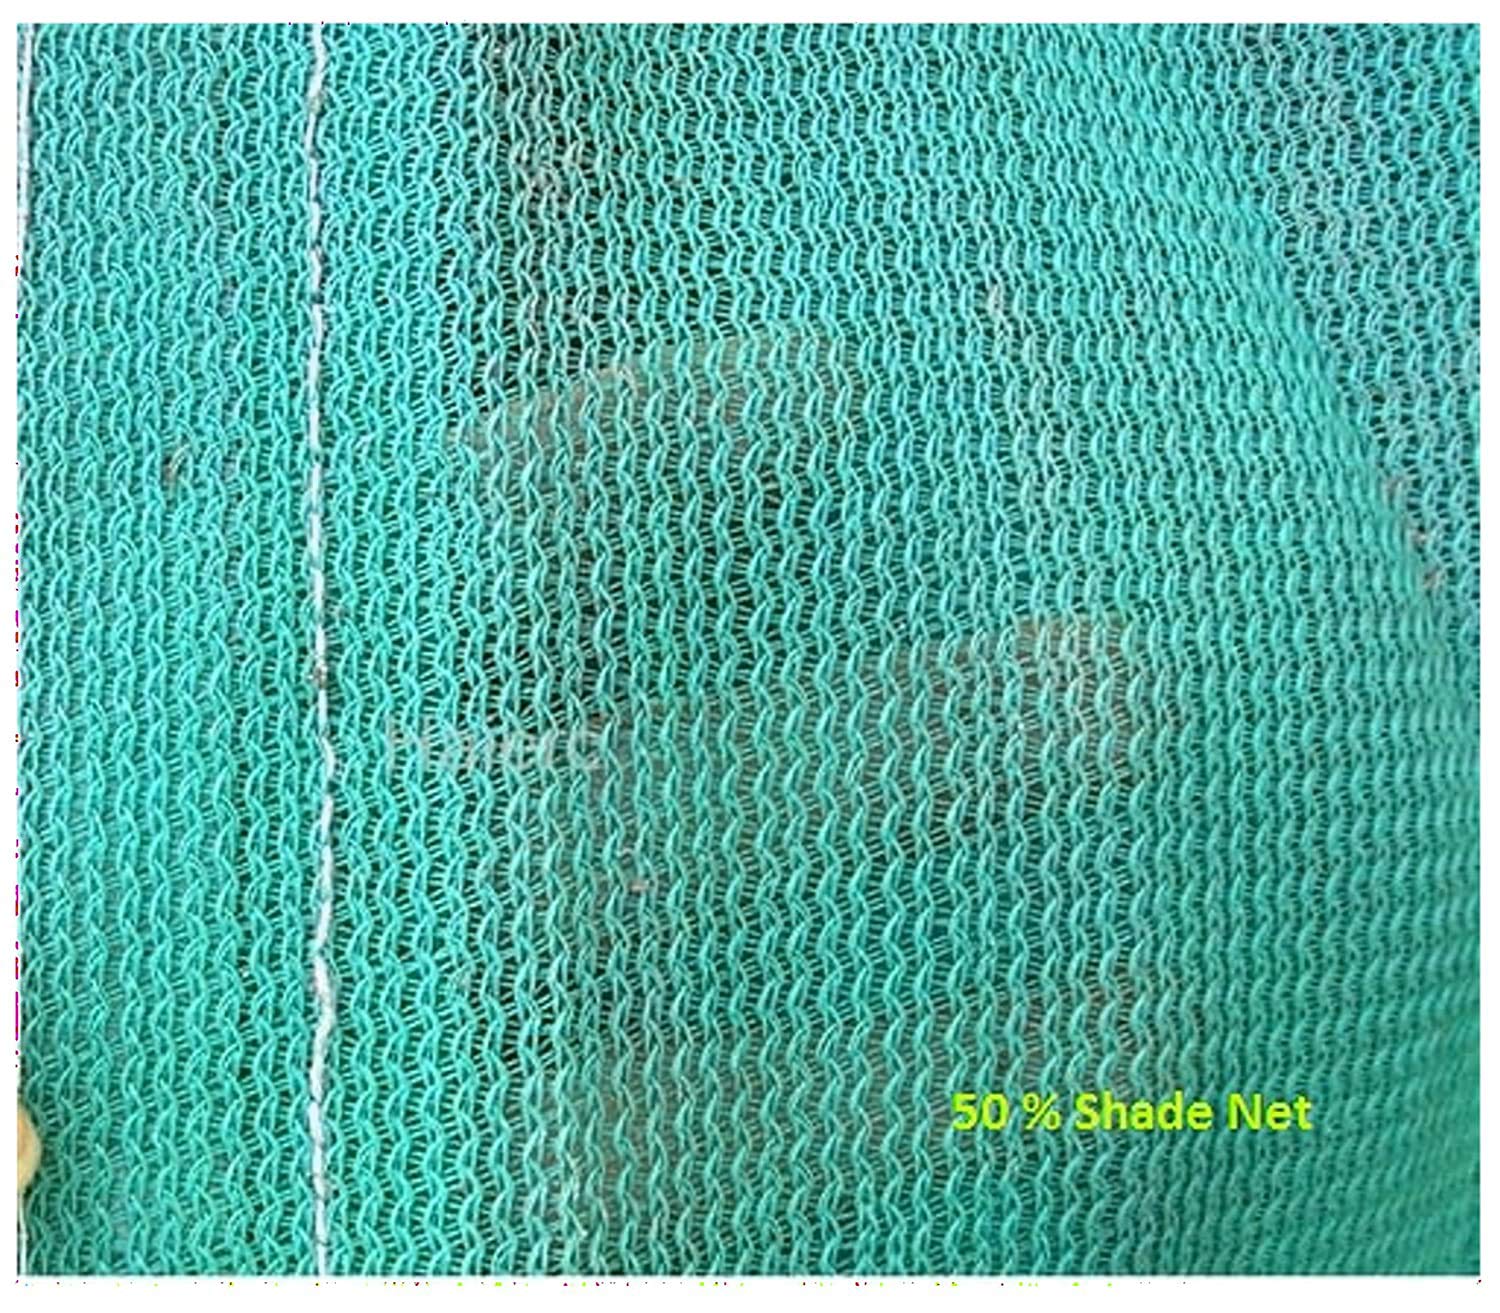 Heart Home 10 x 5 ft. Sun Mesh Shade Sunblock Shade Cloth UV Resistant Net for Garden/Home/Lawn/Shade/Netting/Sports (Green), Standard (F_26_HEARTH016980)